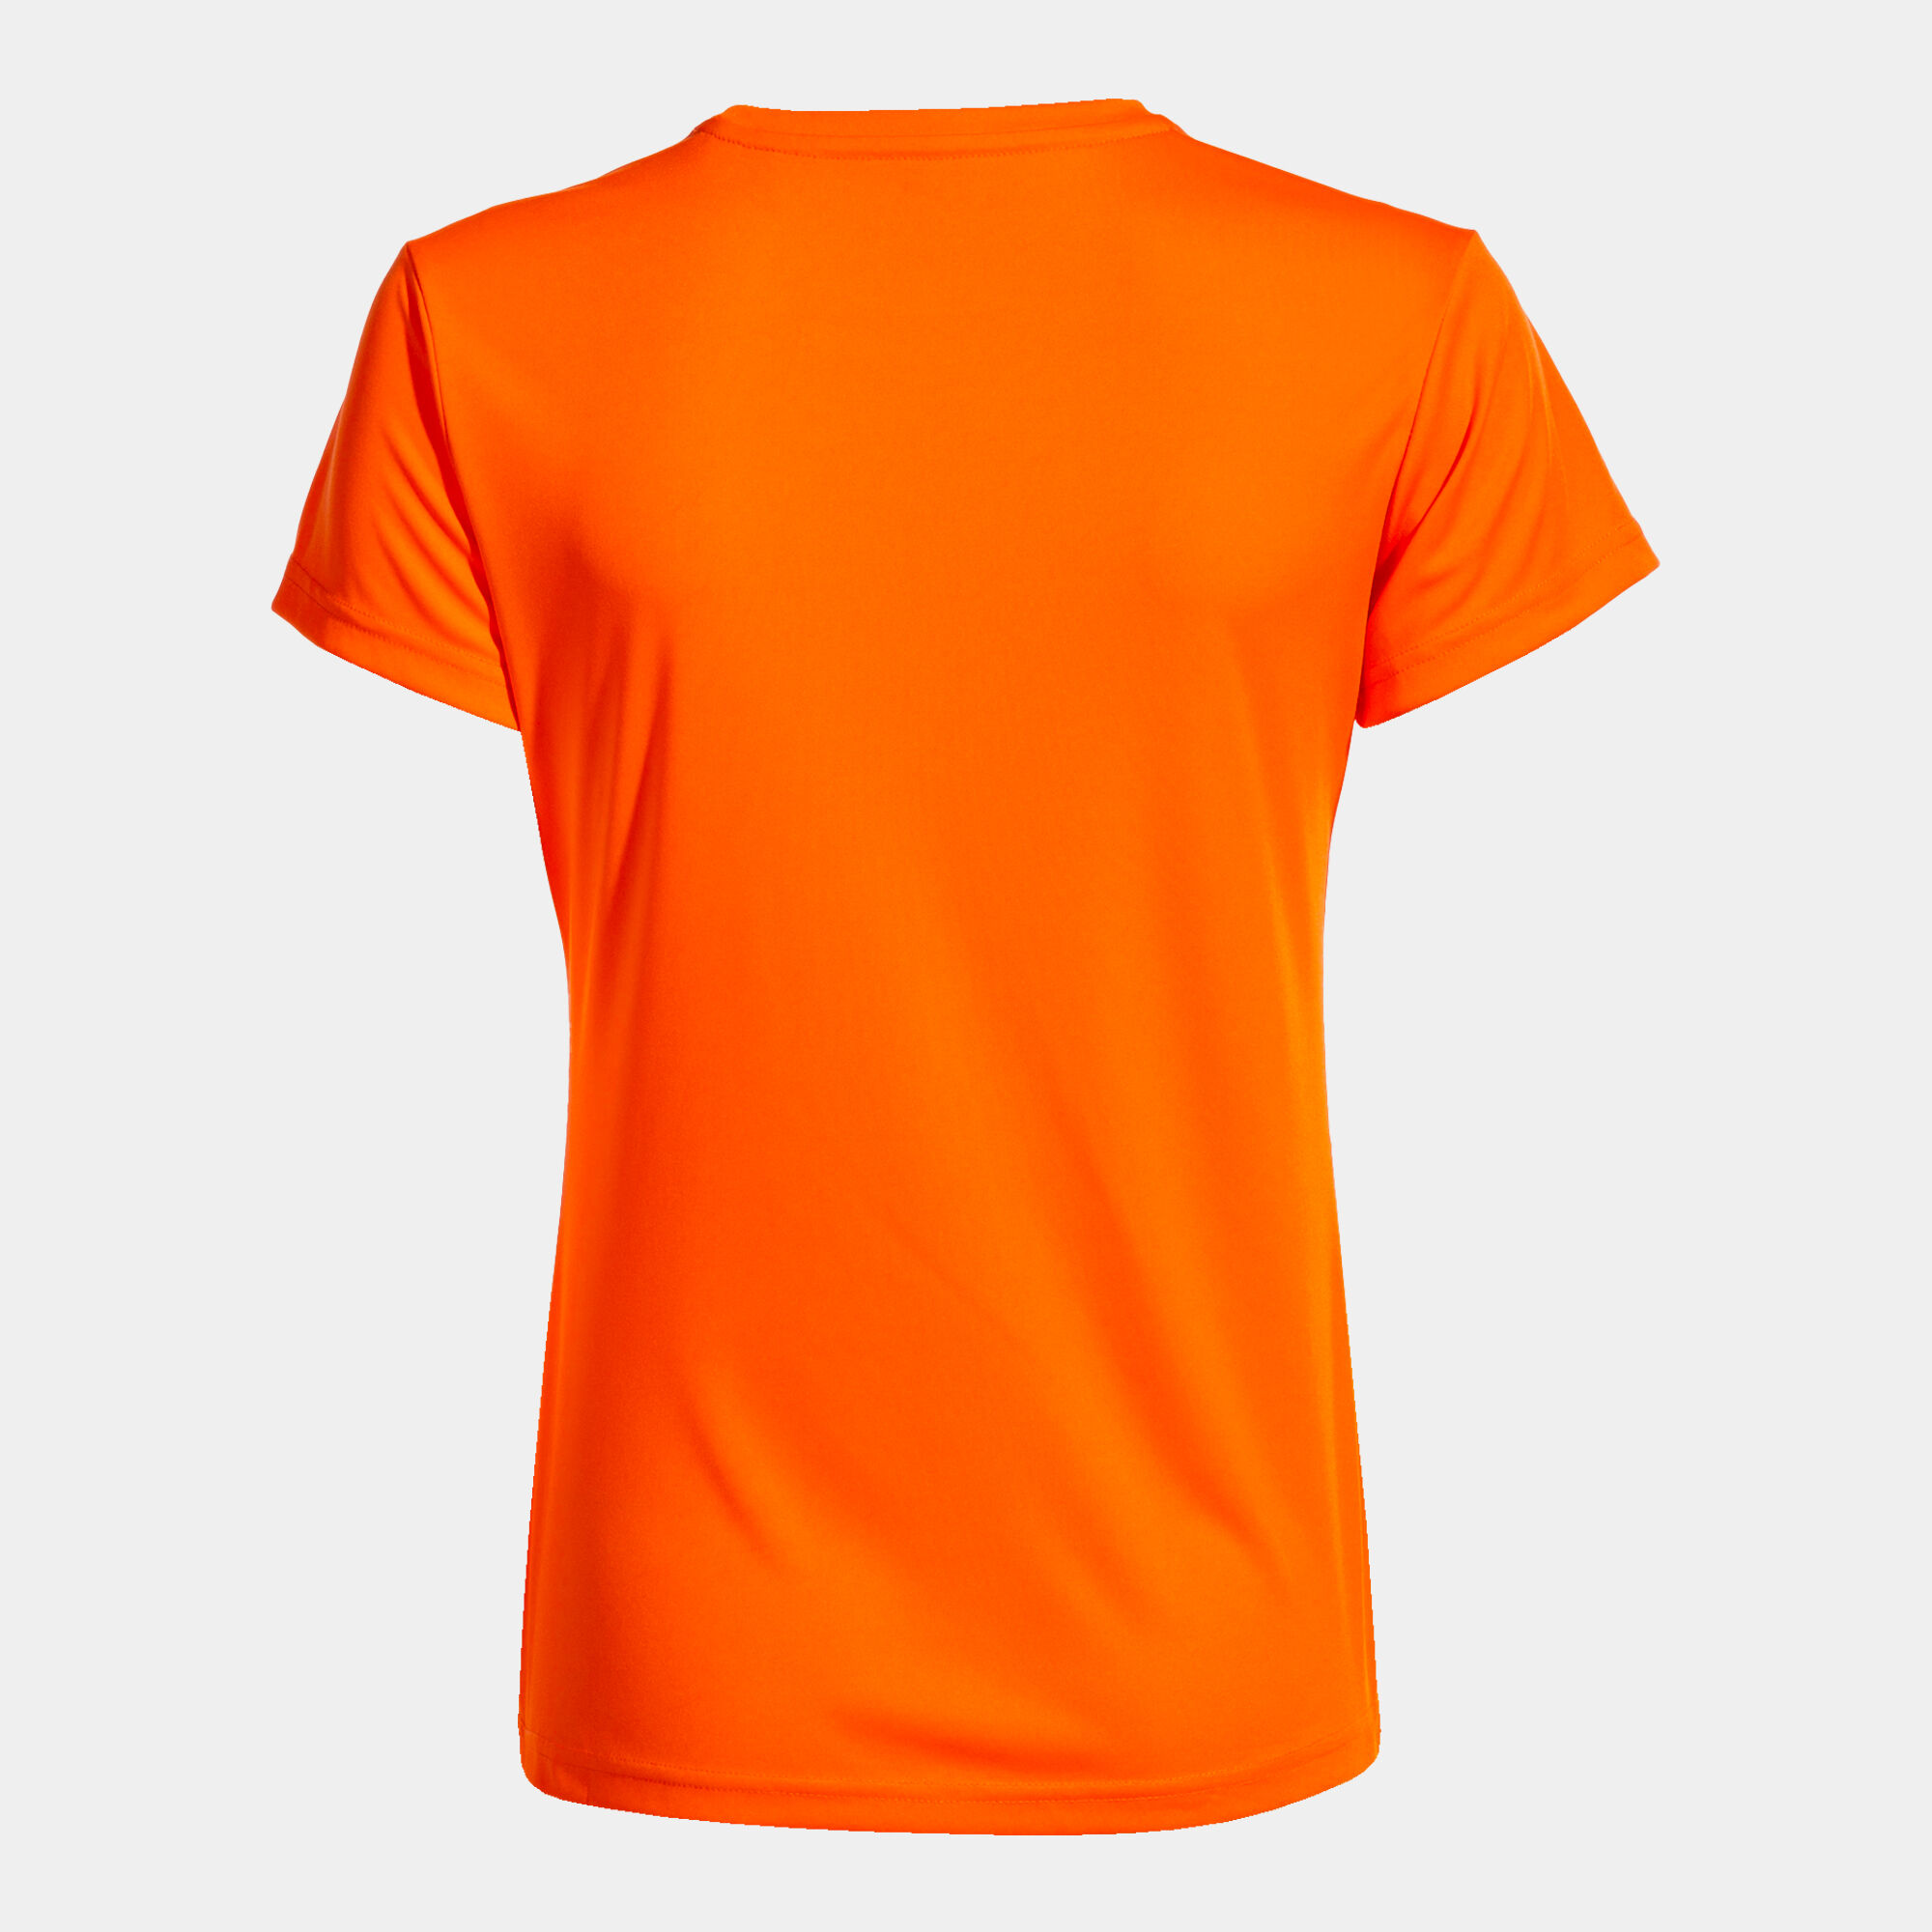 Camiseta manga corta mujer Combi naranja